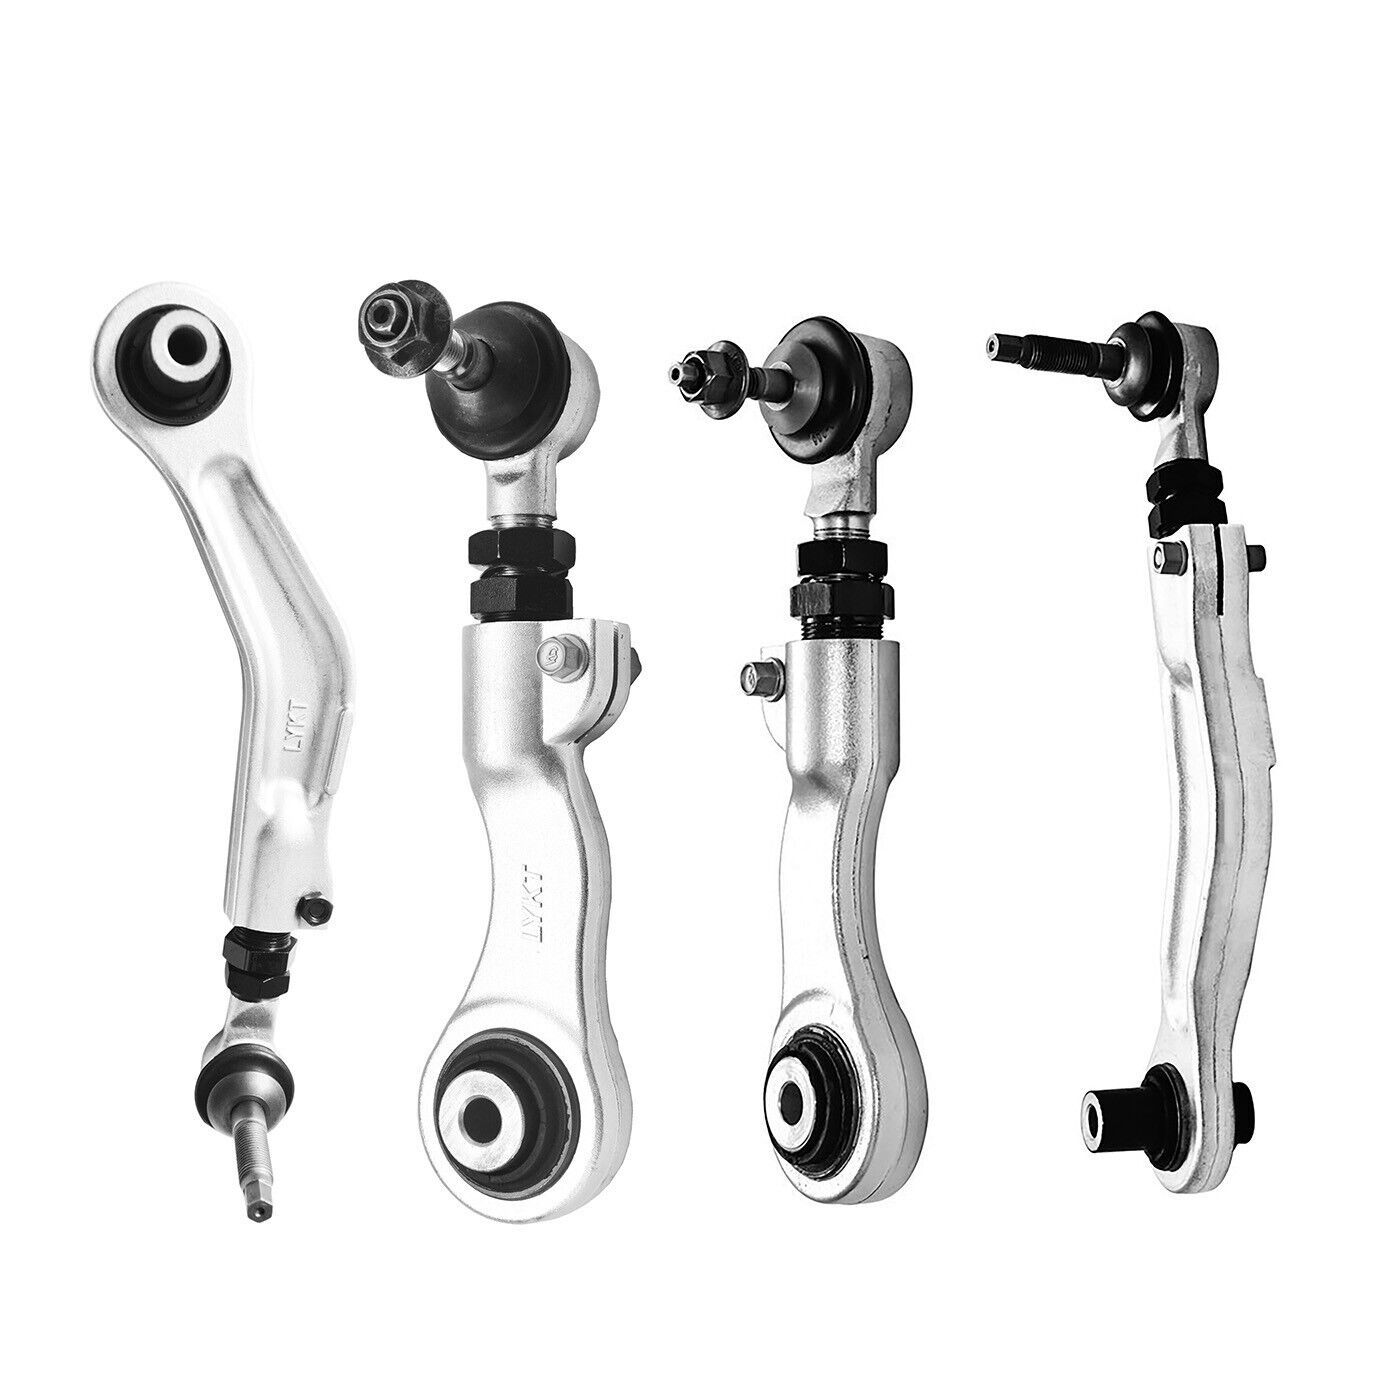 2pcs Adjustable Rear Camber &Toe Arms Kit For BMW 525i-760i 、645Ci、650i、M5、M6、X5